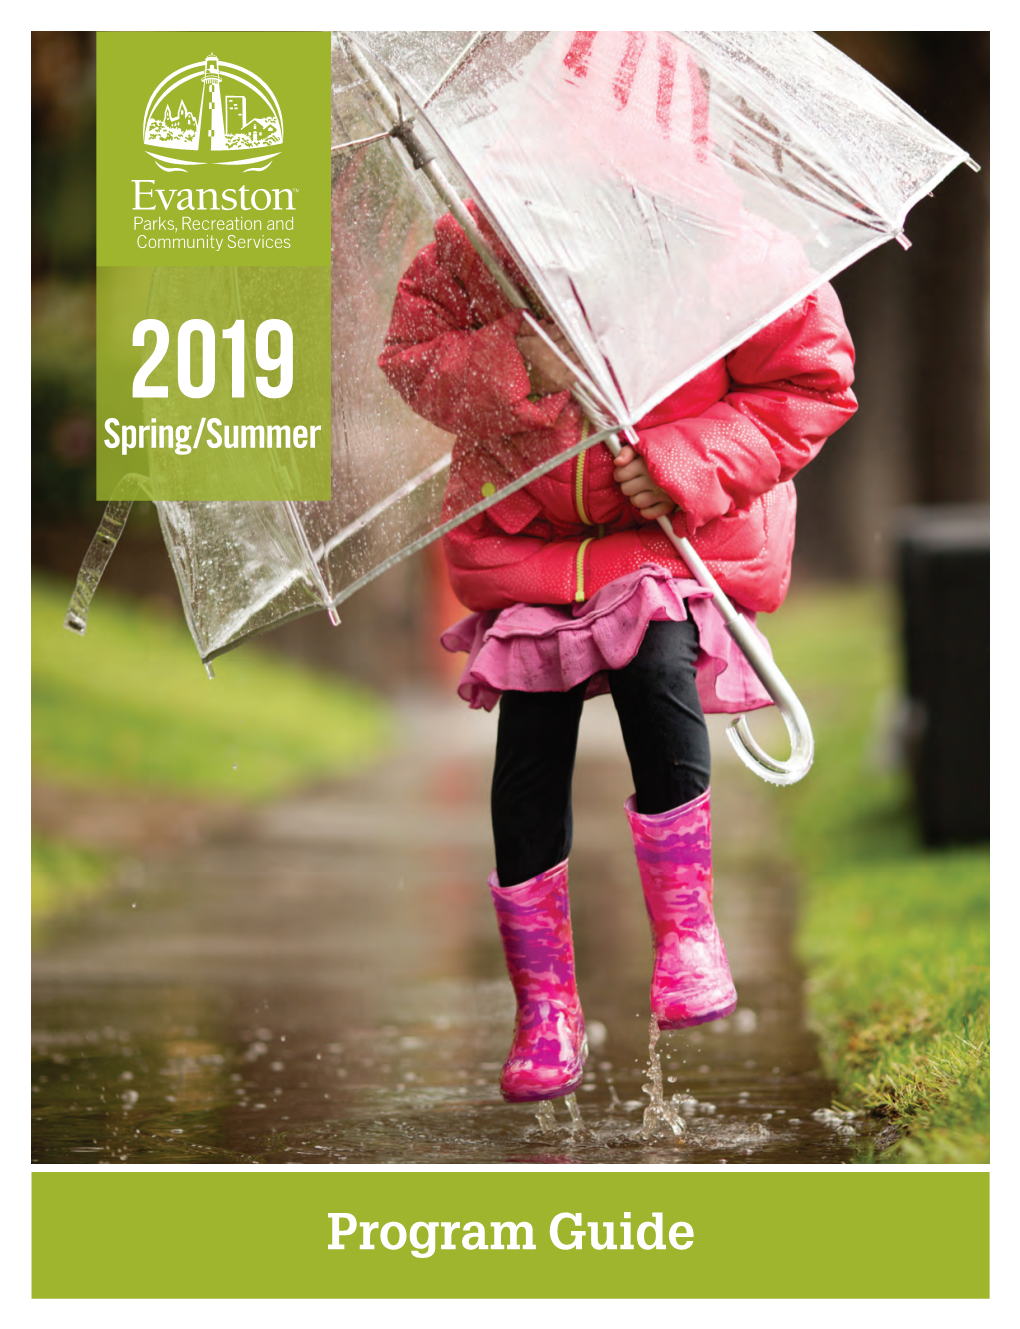 Program Guide 2019 Evanston Park, Recreation and Community Services Spring/Summer Program Guide Available Online: Cityofevanston.Org